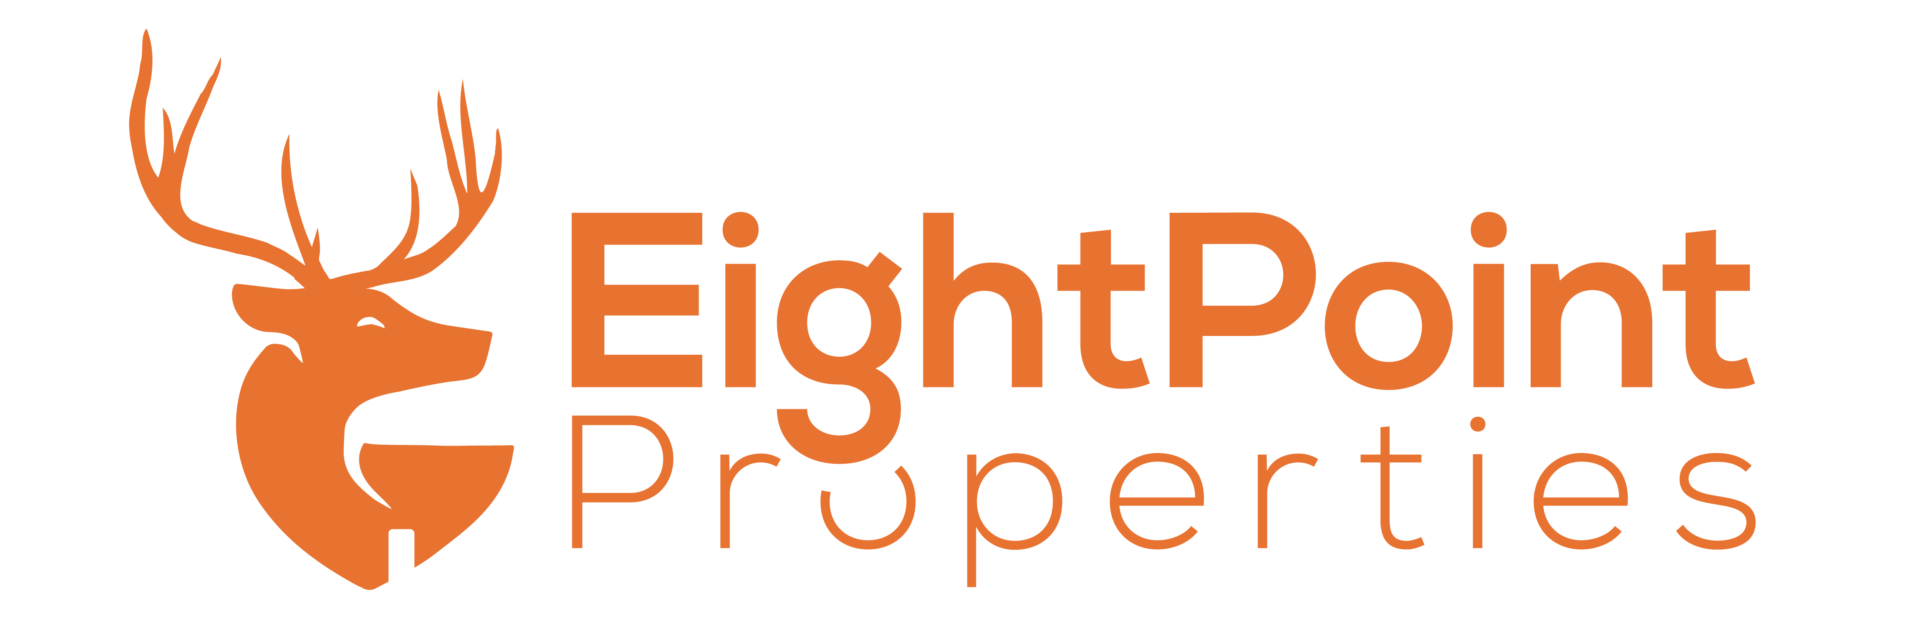 Eight Point Properties logo